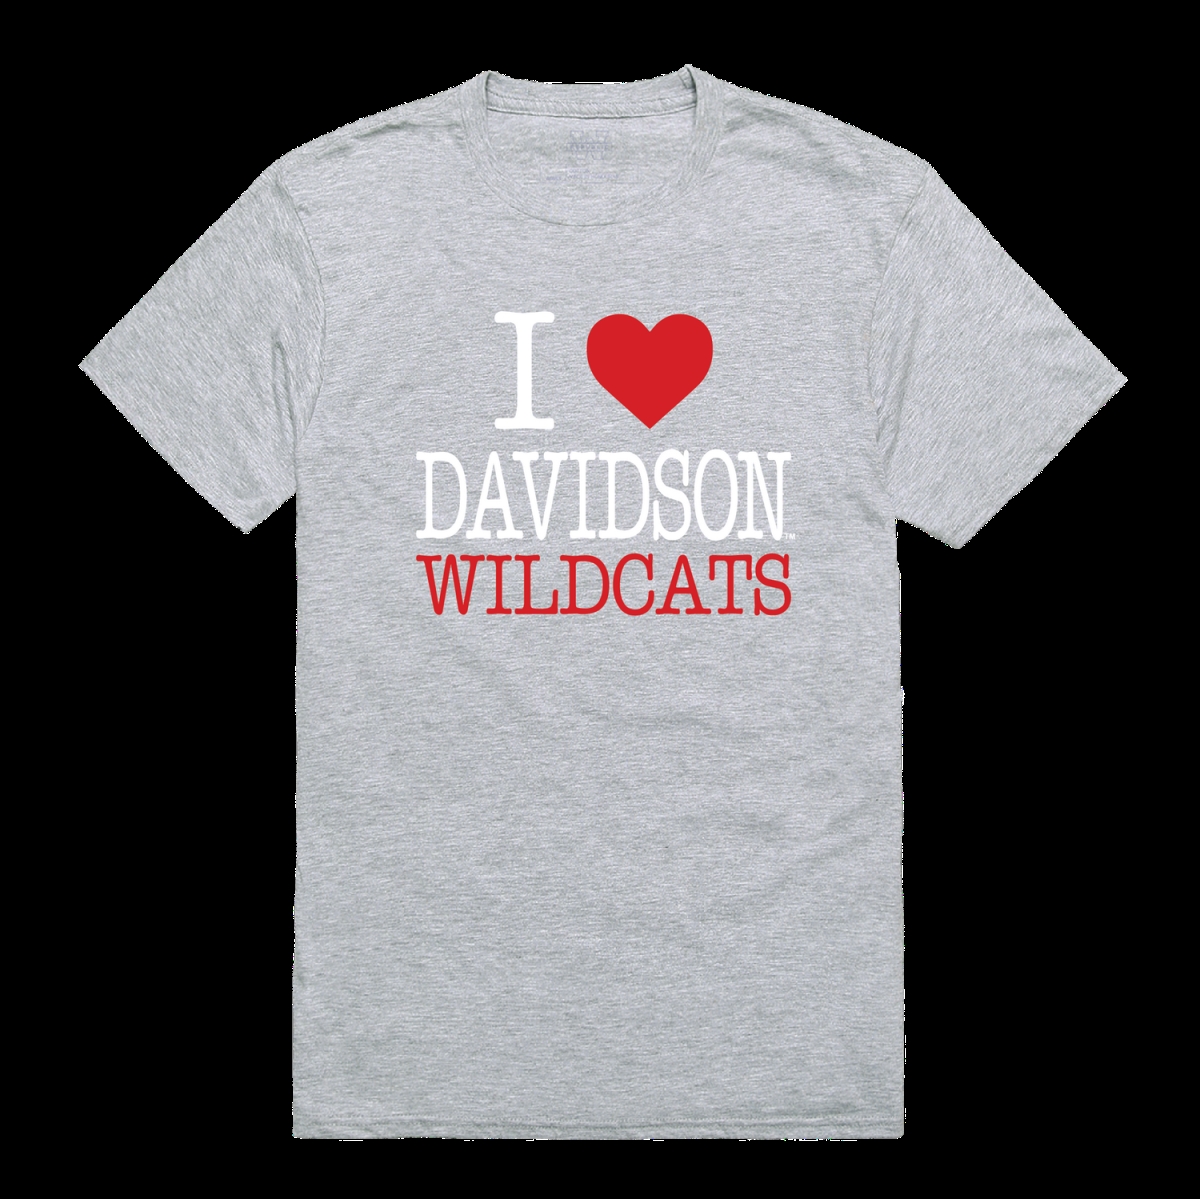 W Republic 551-288-HG2-03 Davidson Wildcats I Love T-Shirt&#44; Heather Grey - Large